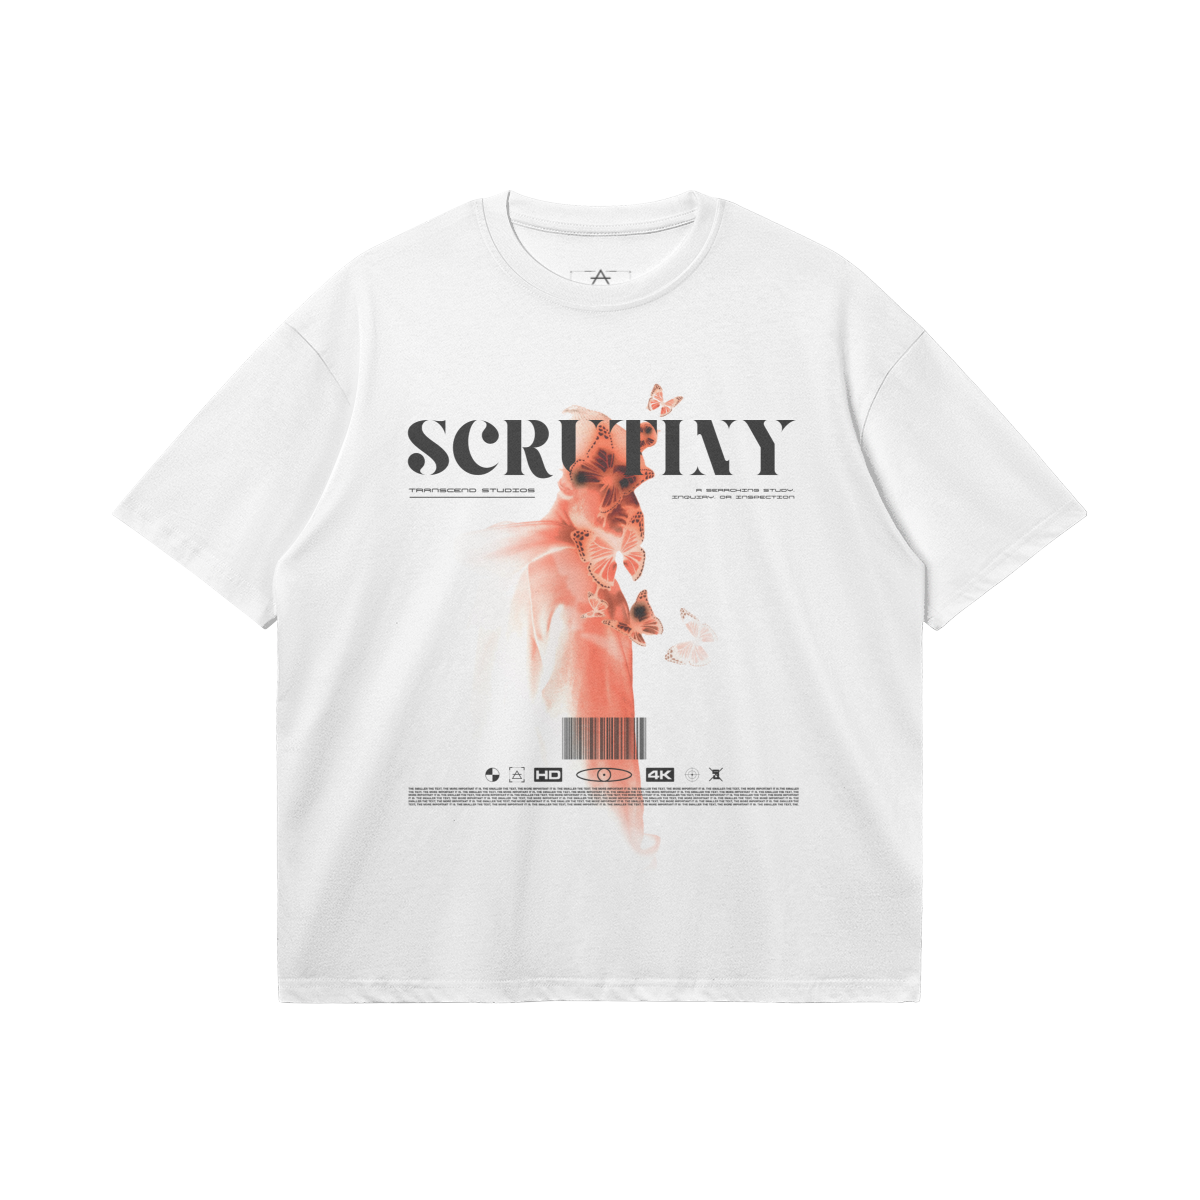 Scrutiny | Oversized Boxy White T-Shirt